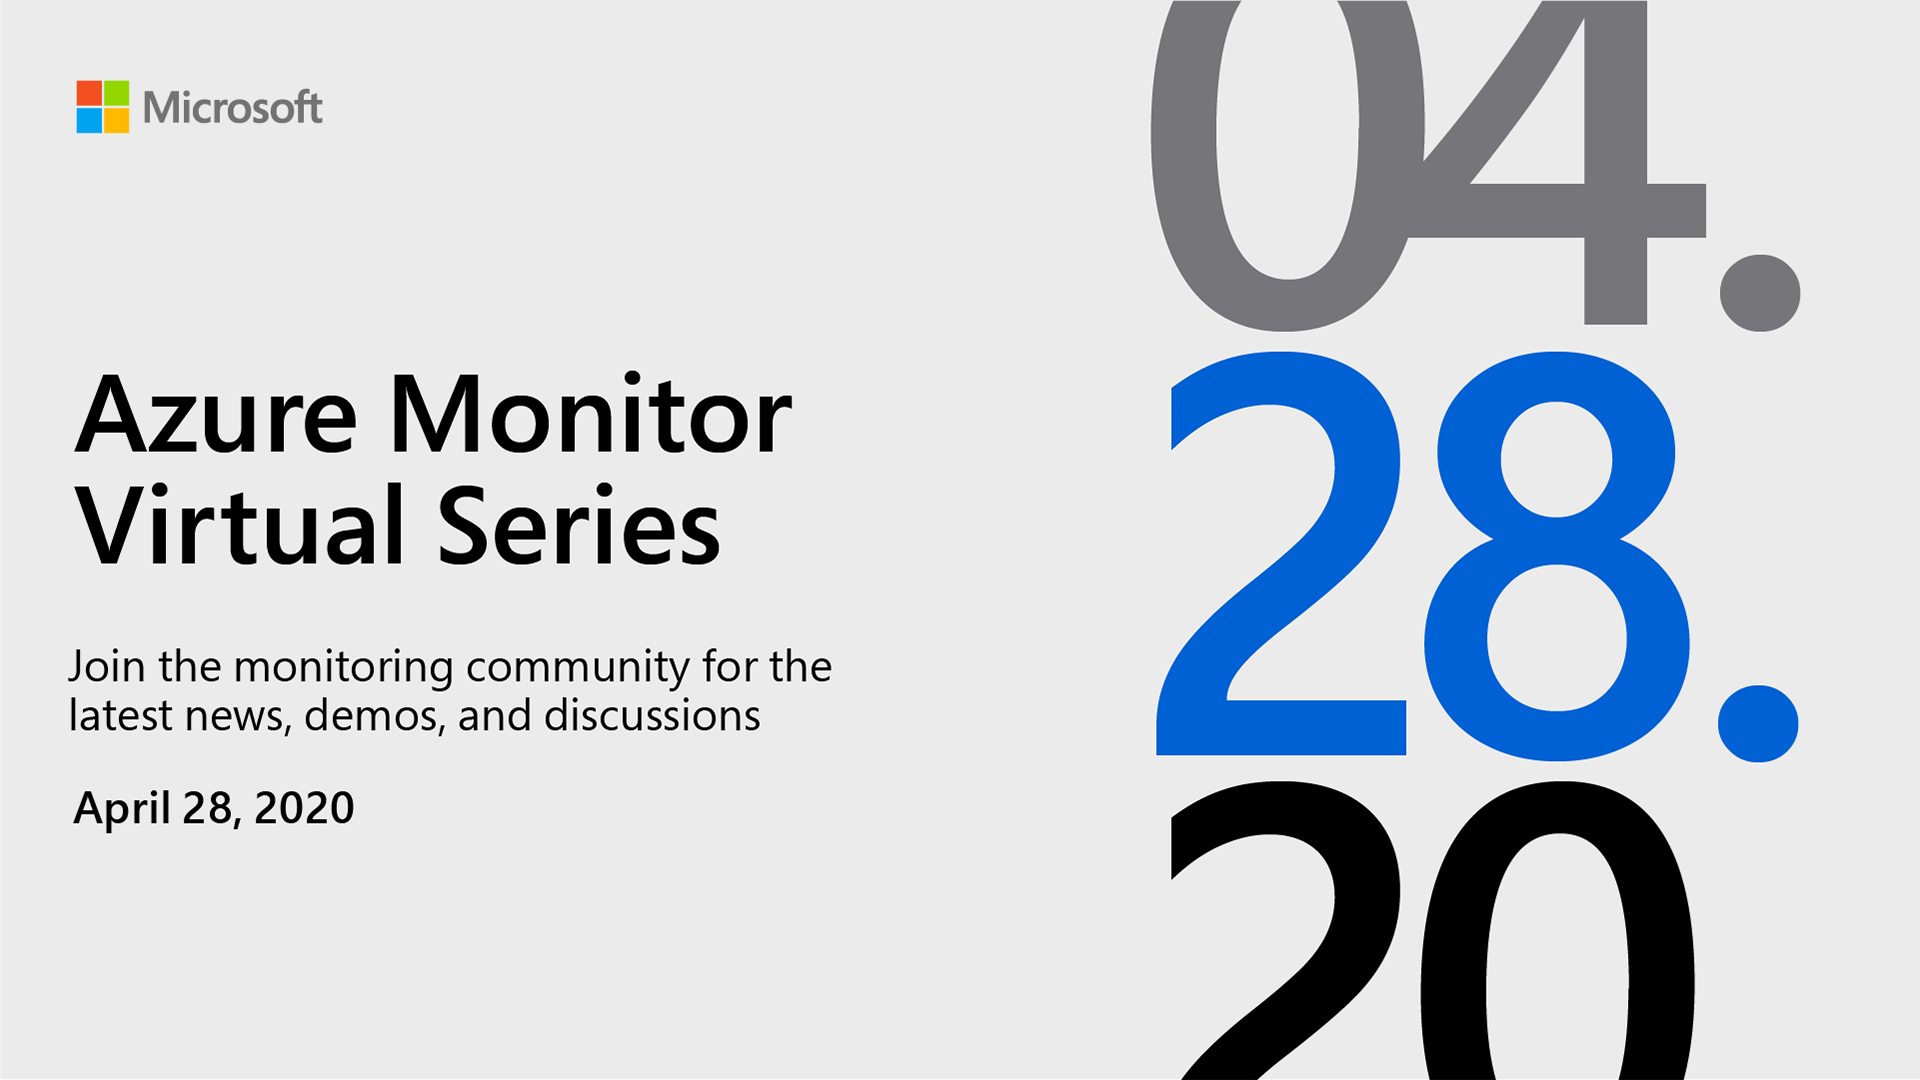 Azure Monitor VS_General Event Social Graphic 1_FB, LI, TW_1920x1080.png